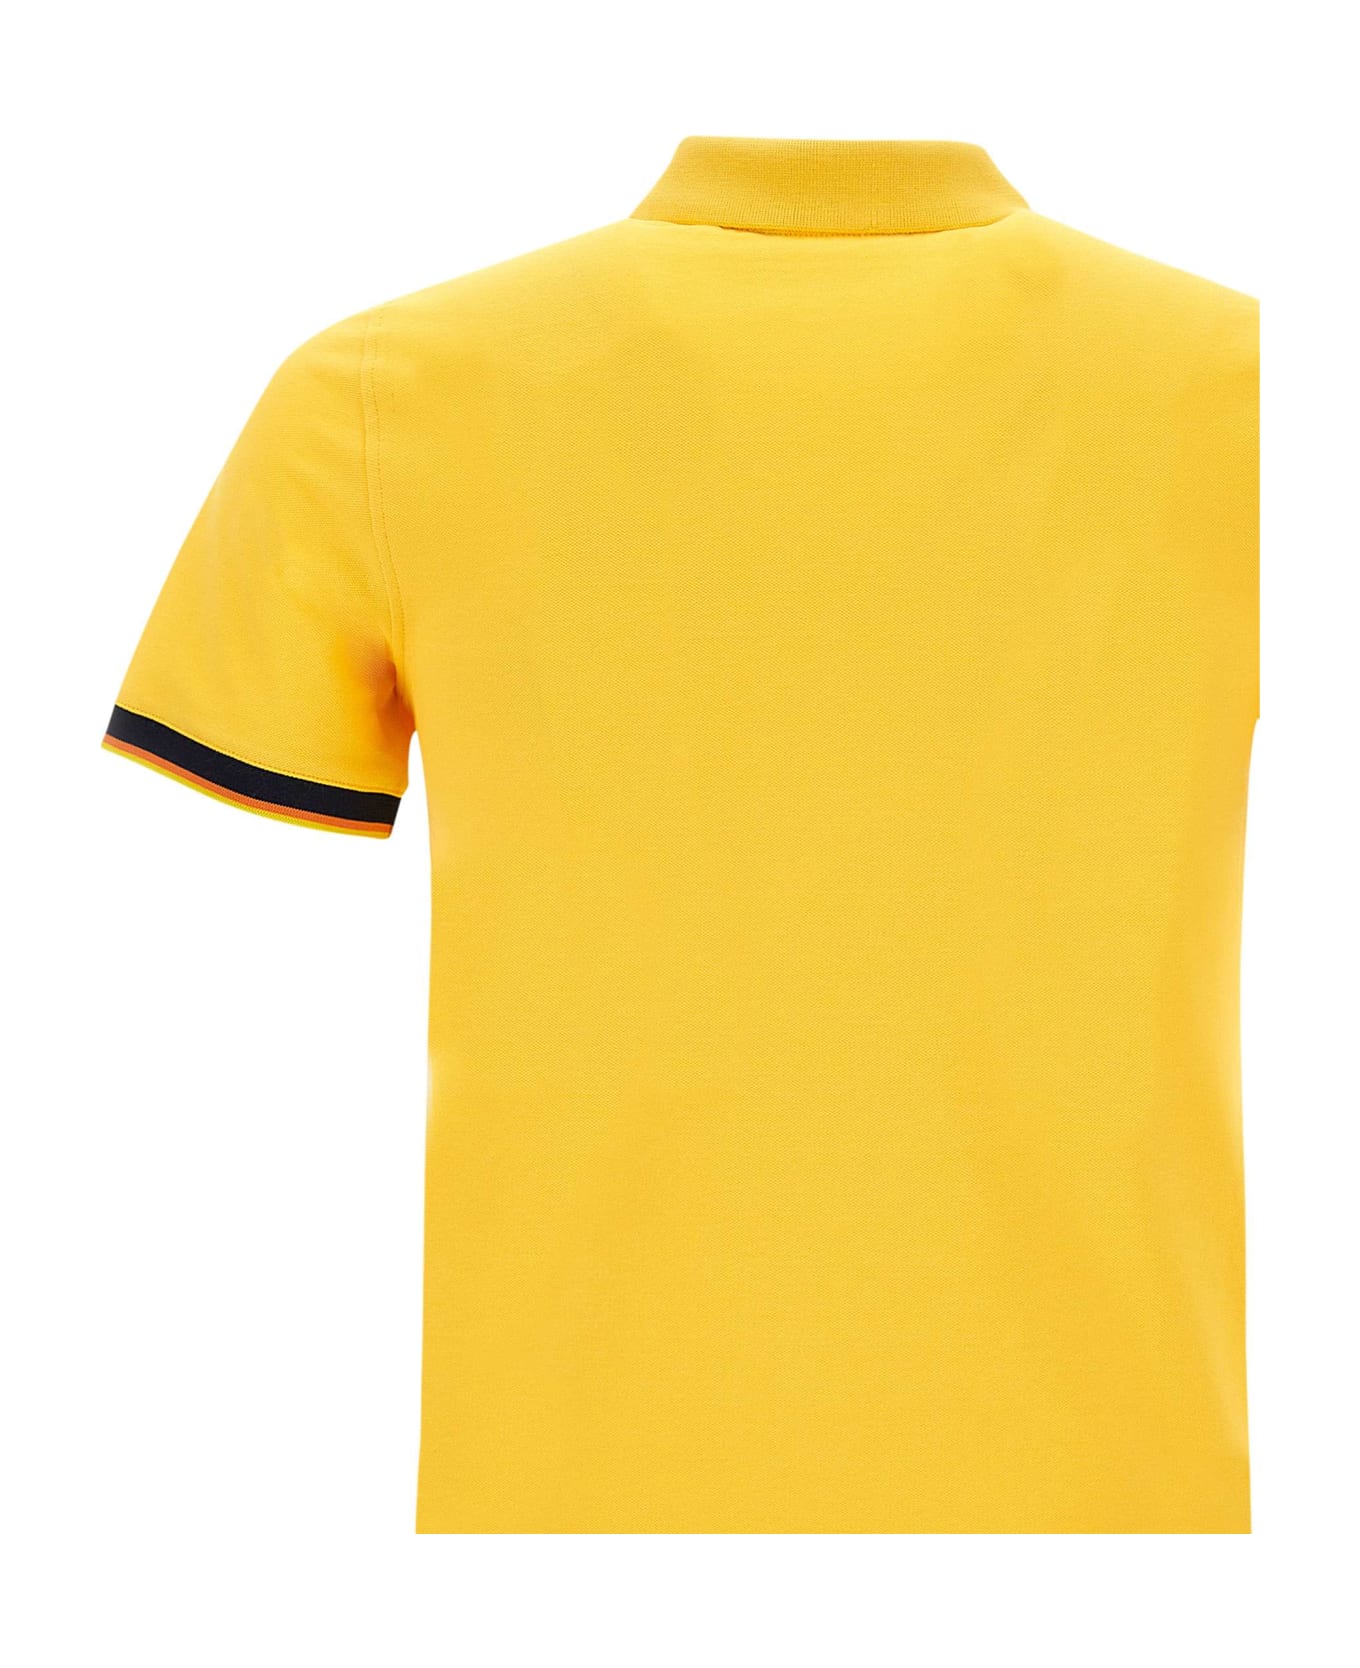 K-Way 'vincent' Cotton Polo Shirt - Yellow Sunstruck ポロシャツ